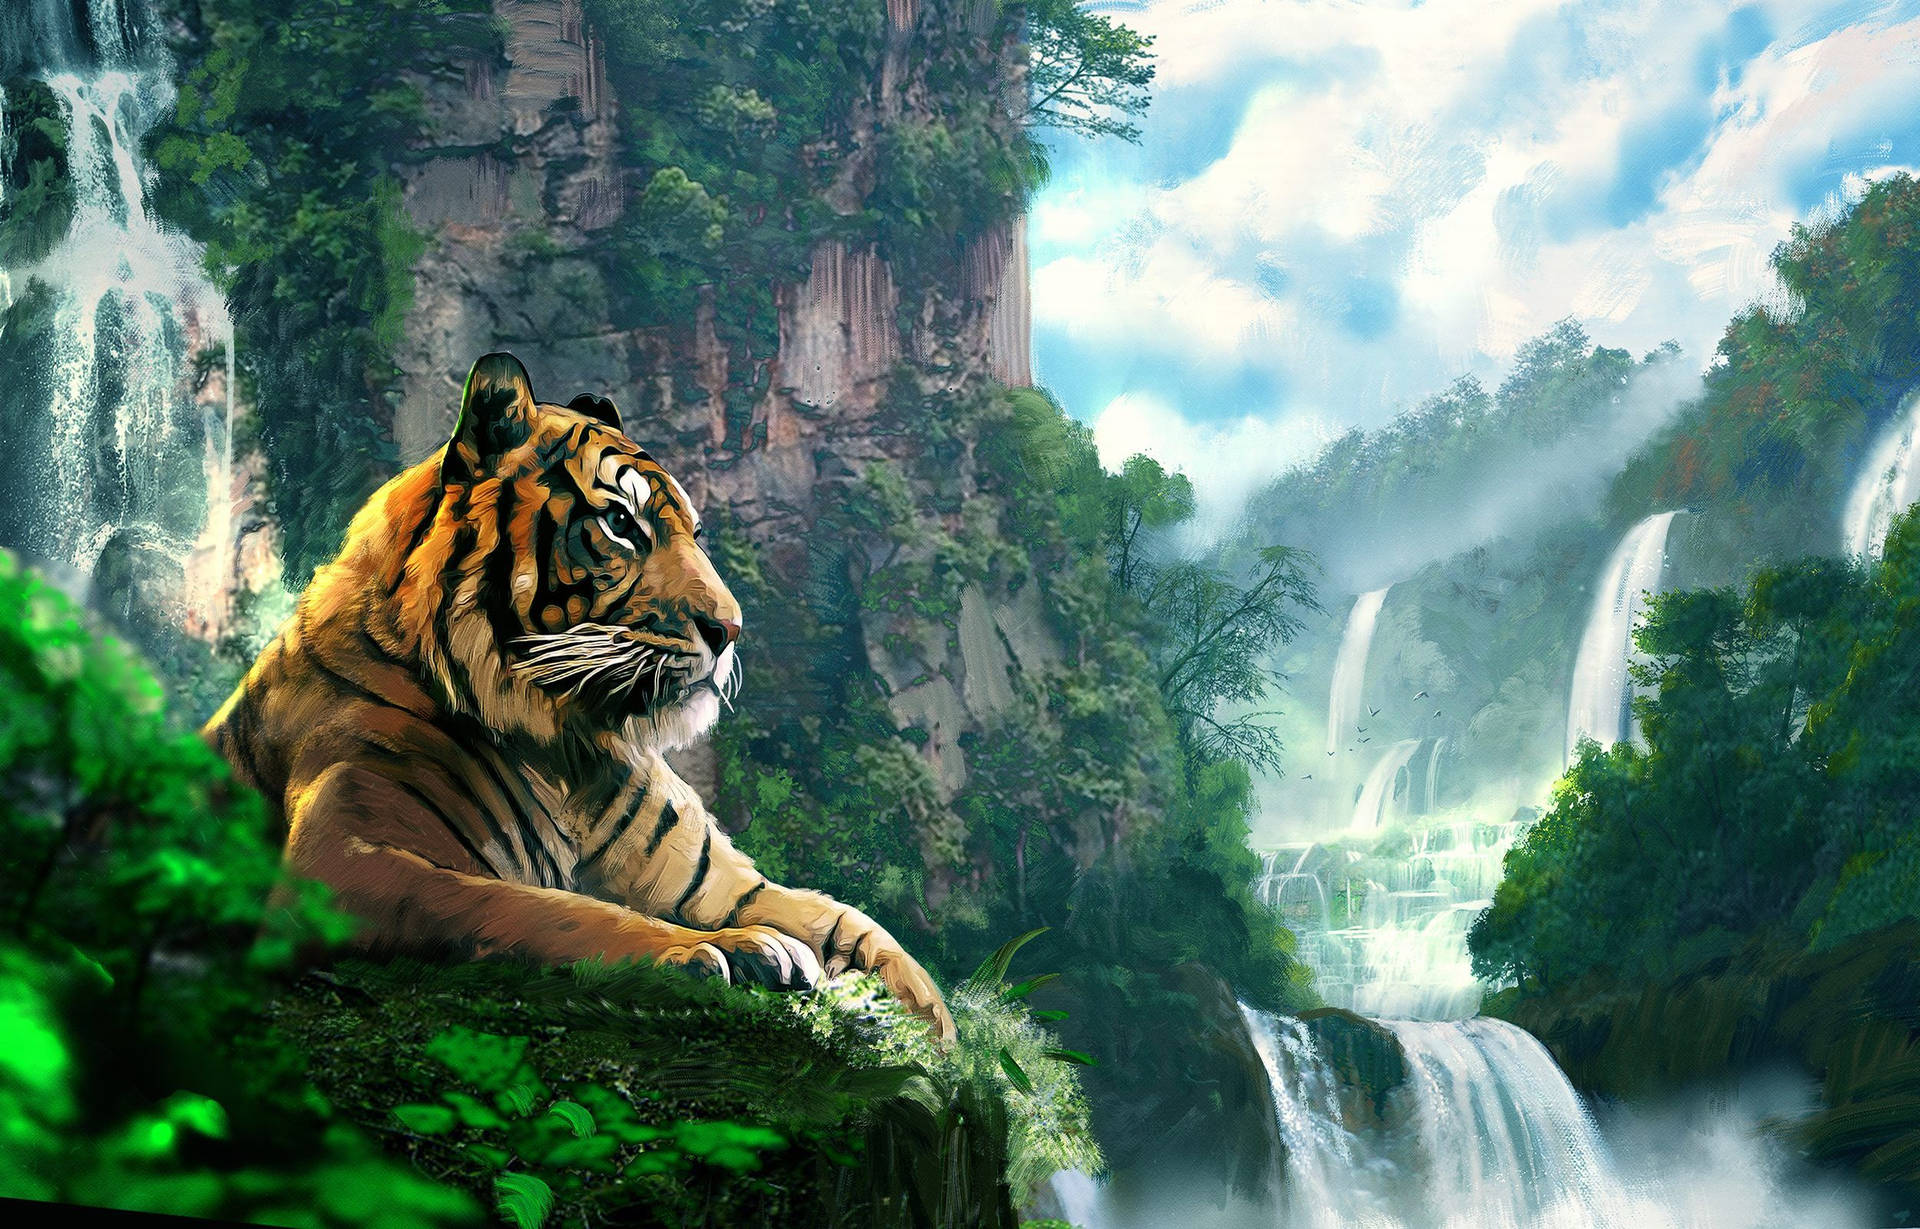 Tiger Near Waterfalls Painting Wallpaper